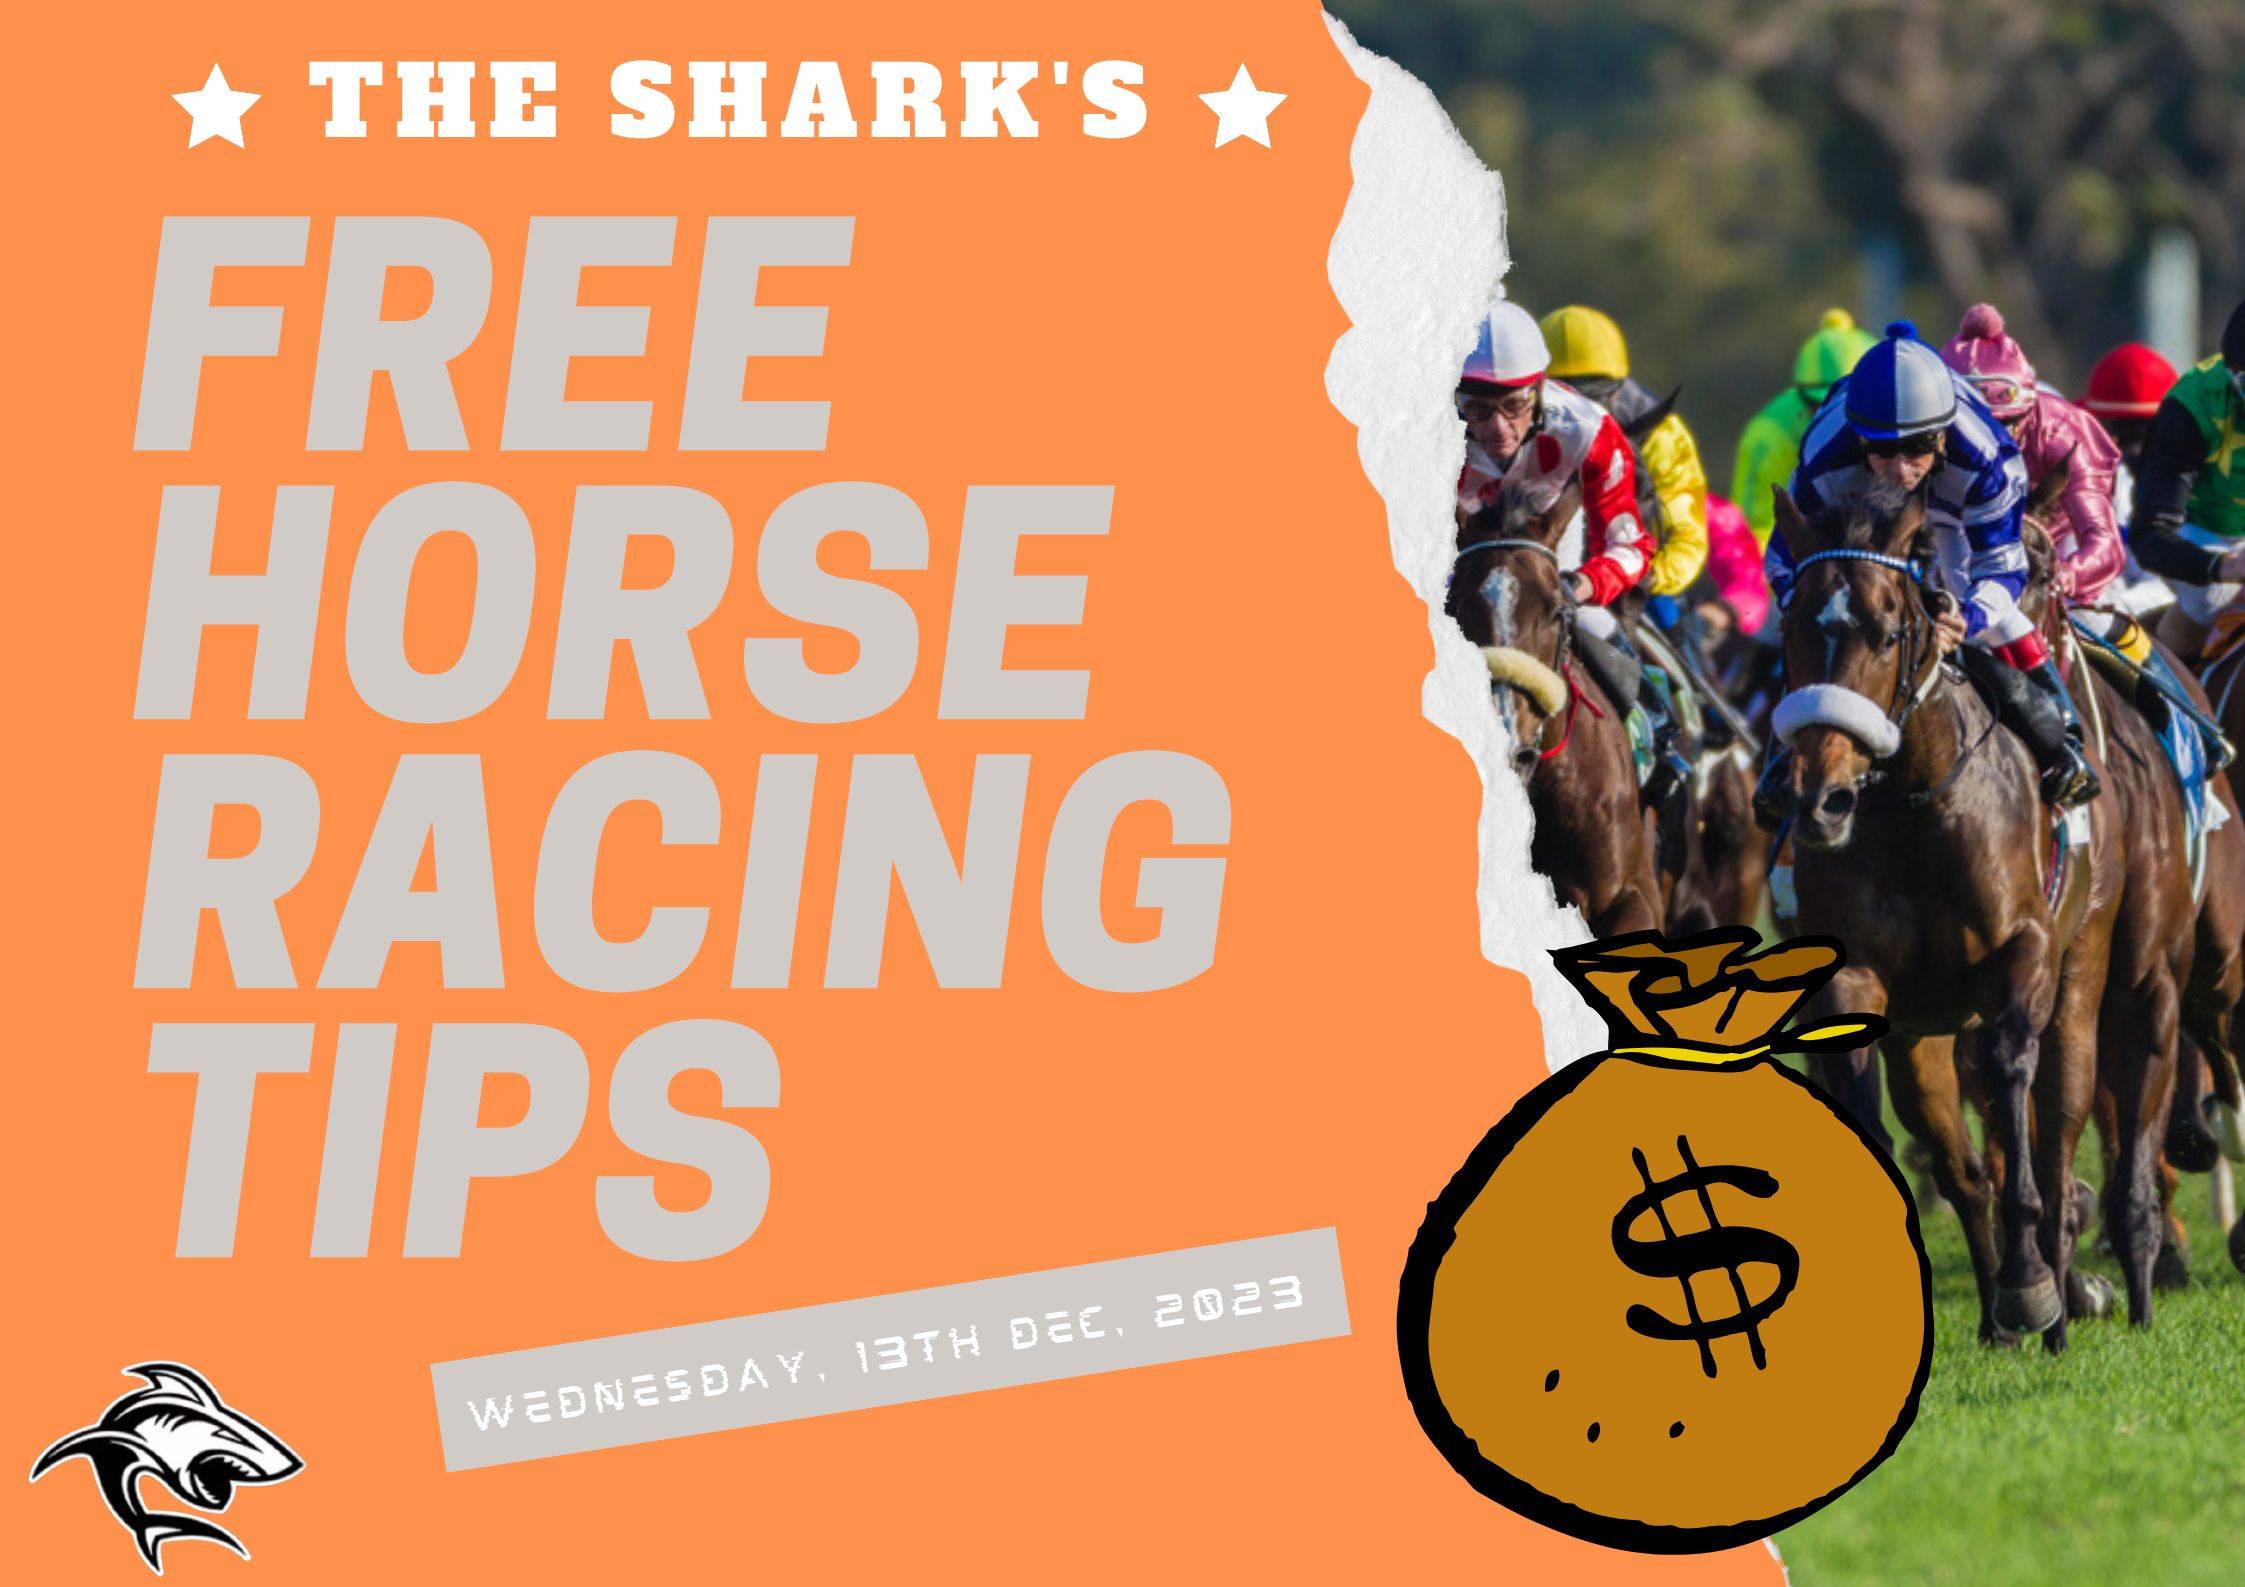 Free Horse Racing Tips - 13th Dec